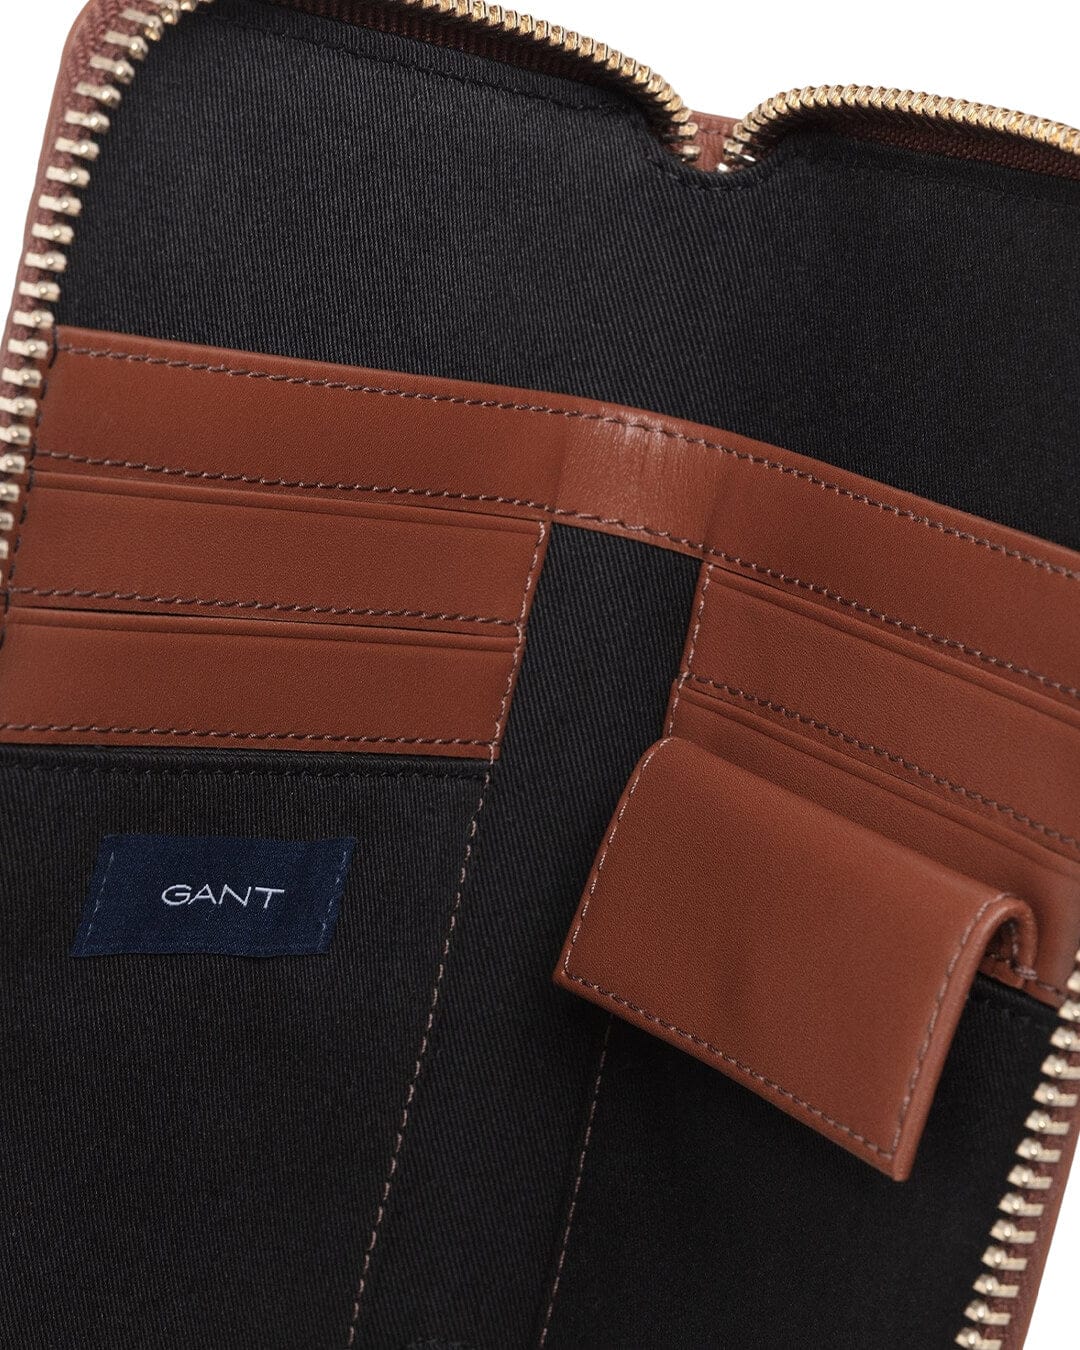 Gant Wallets One Size Gant Brown Leather Wallet